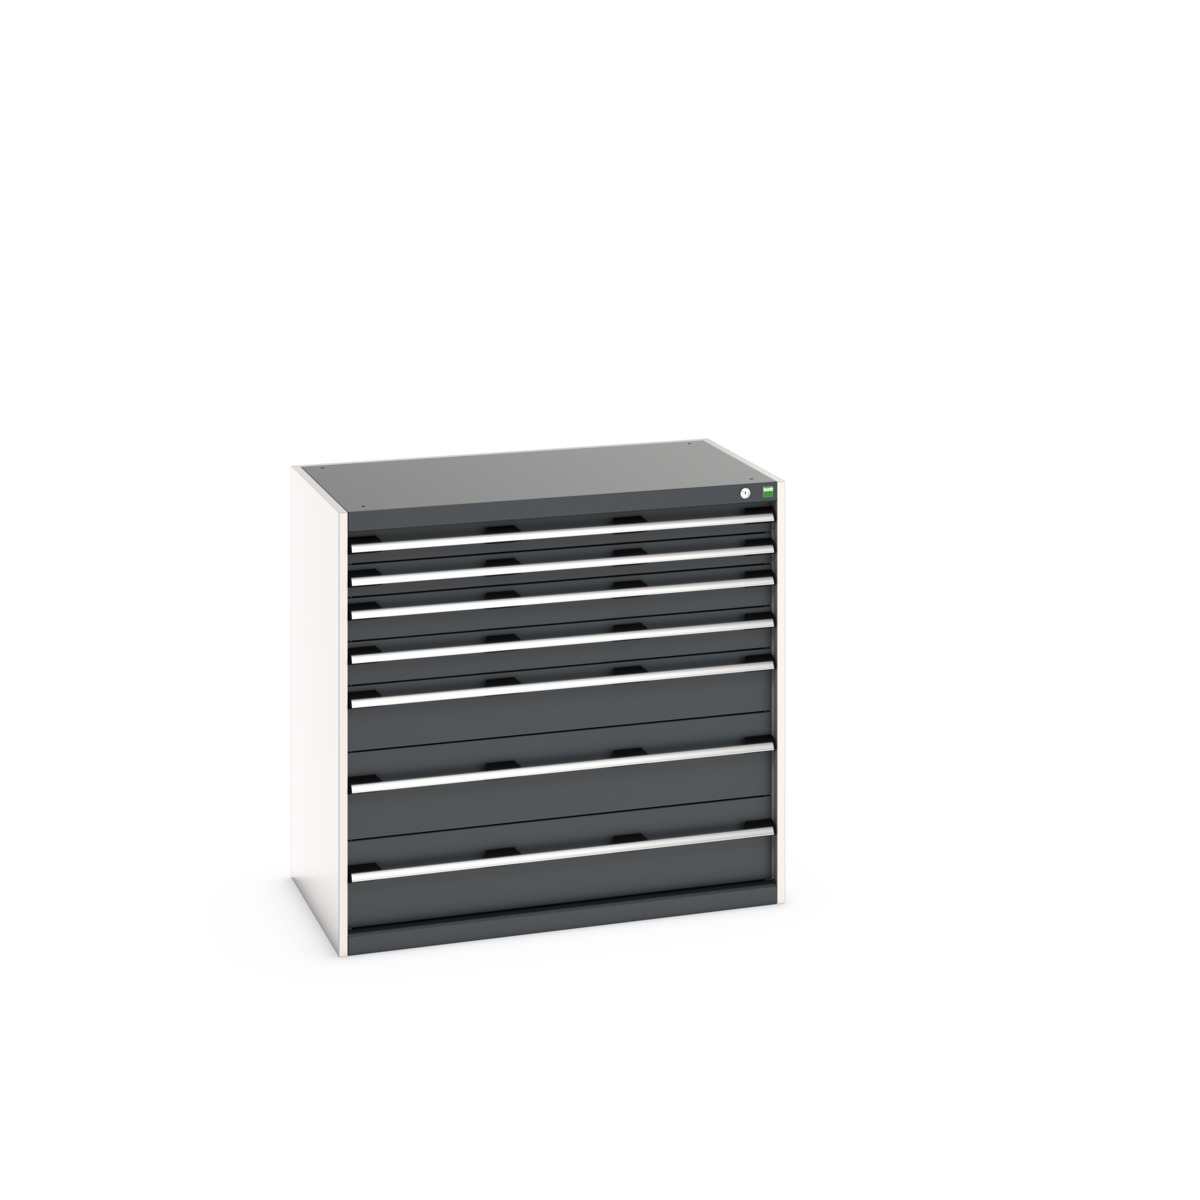 40021030. - cubio drawer cabinet